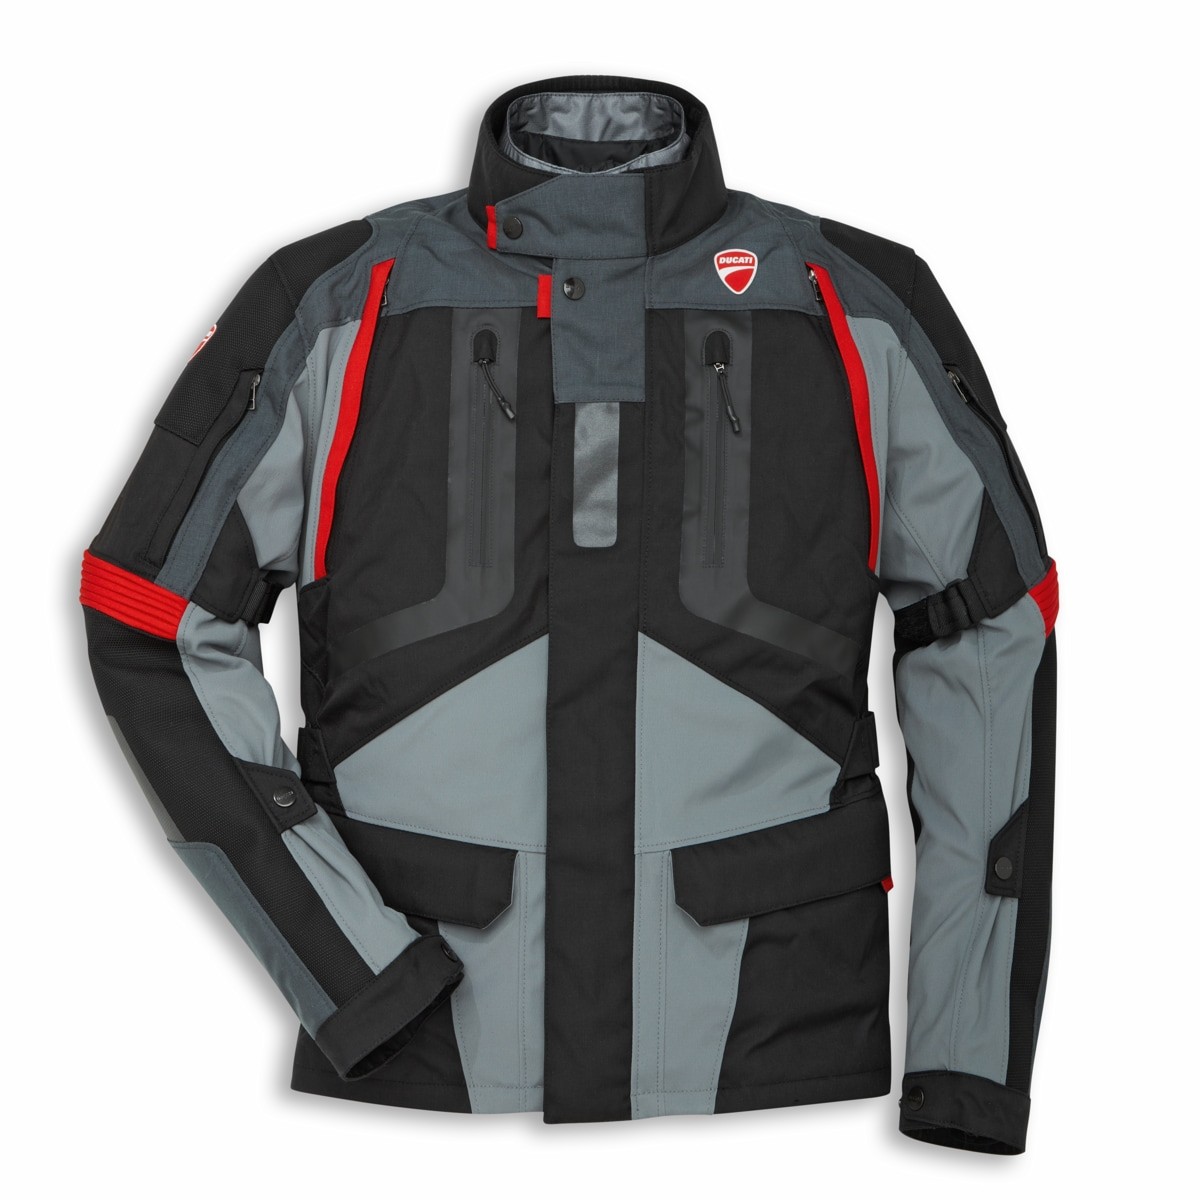 Strada C4 - Fabric jacket